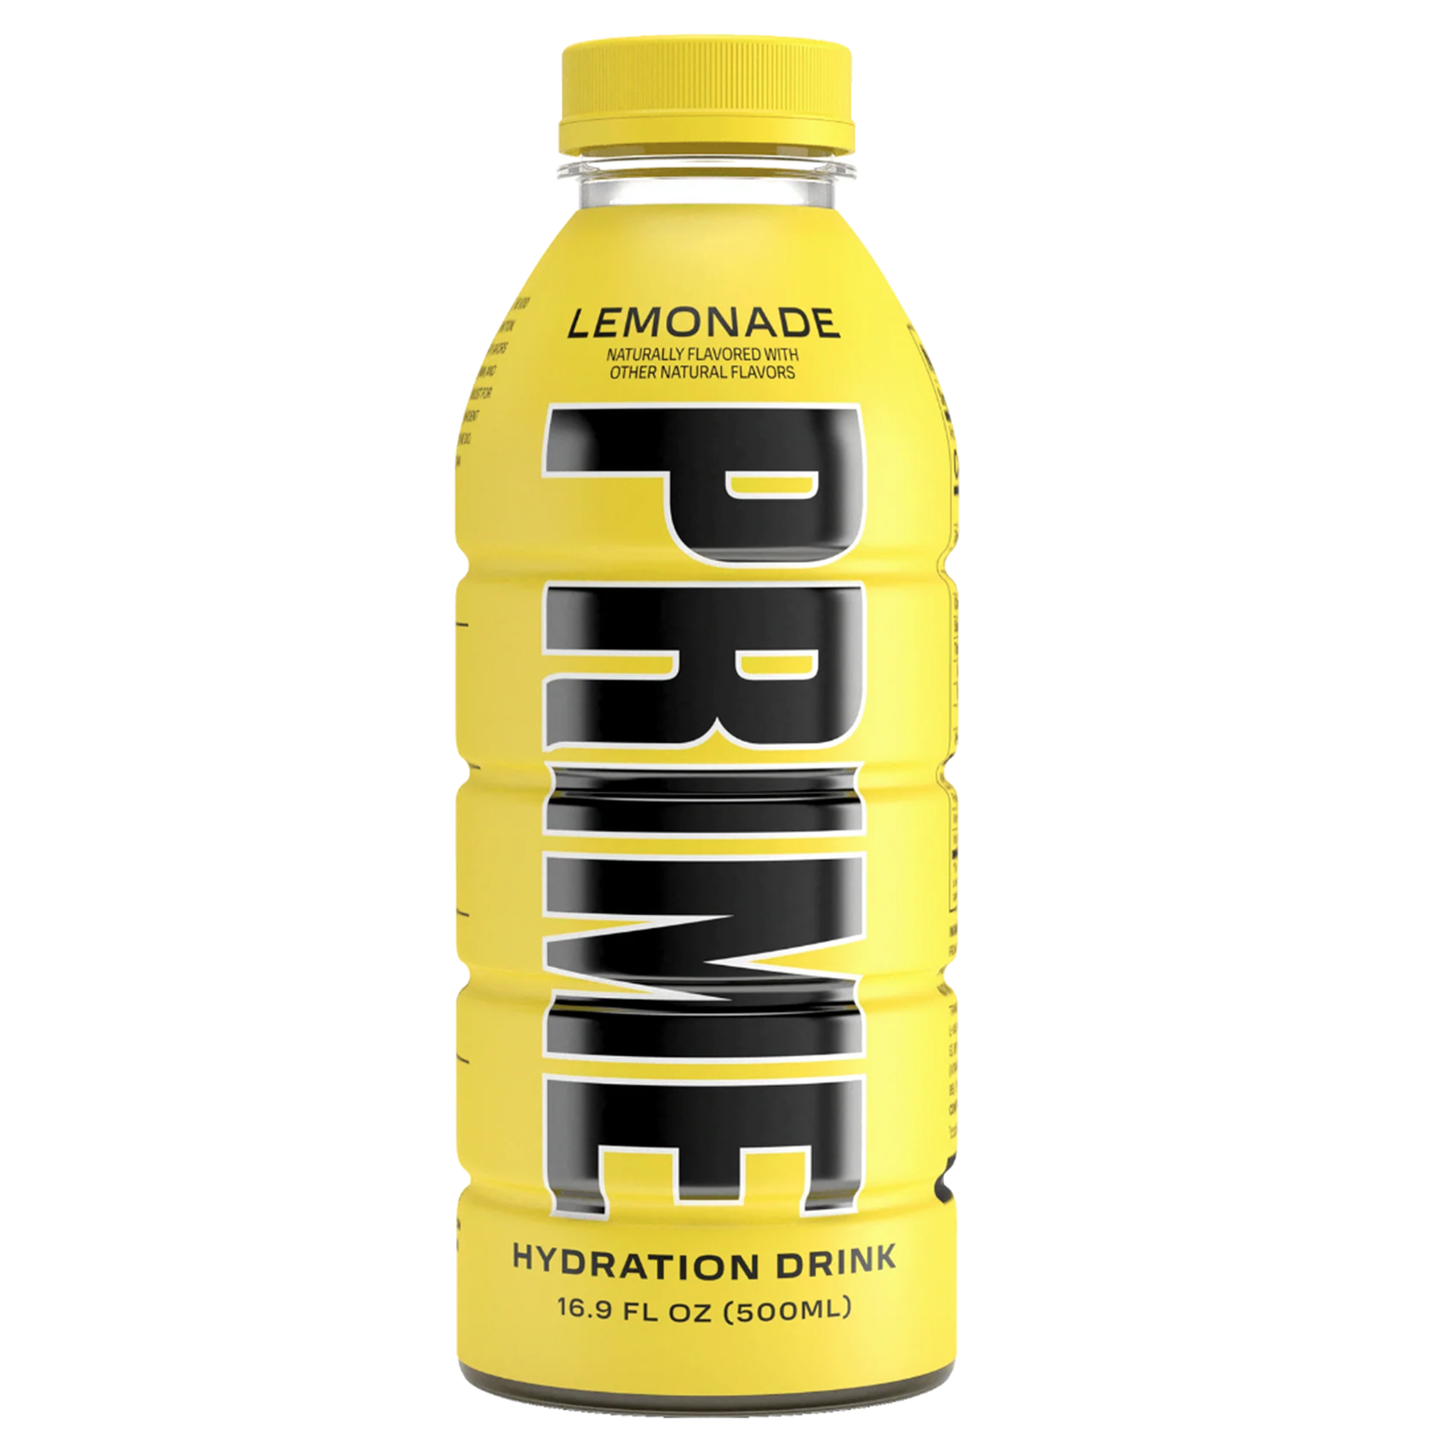 Prime Hydration Drink Australia by KSI & Logan Paul